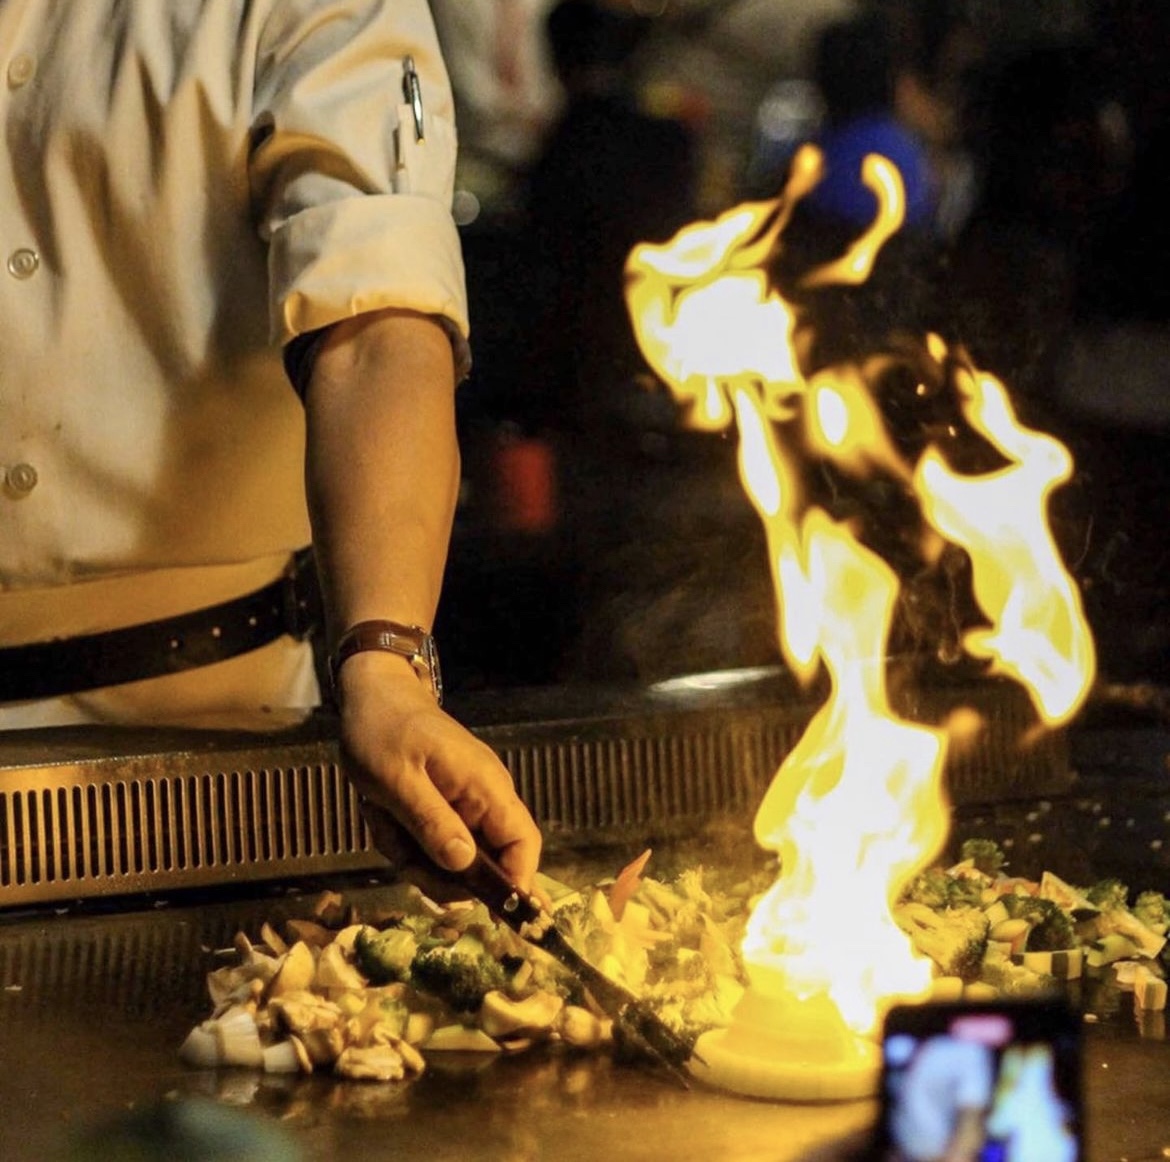 chef cooking teppanyaki style